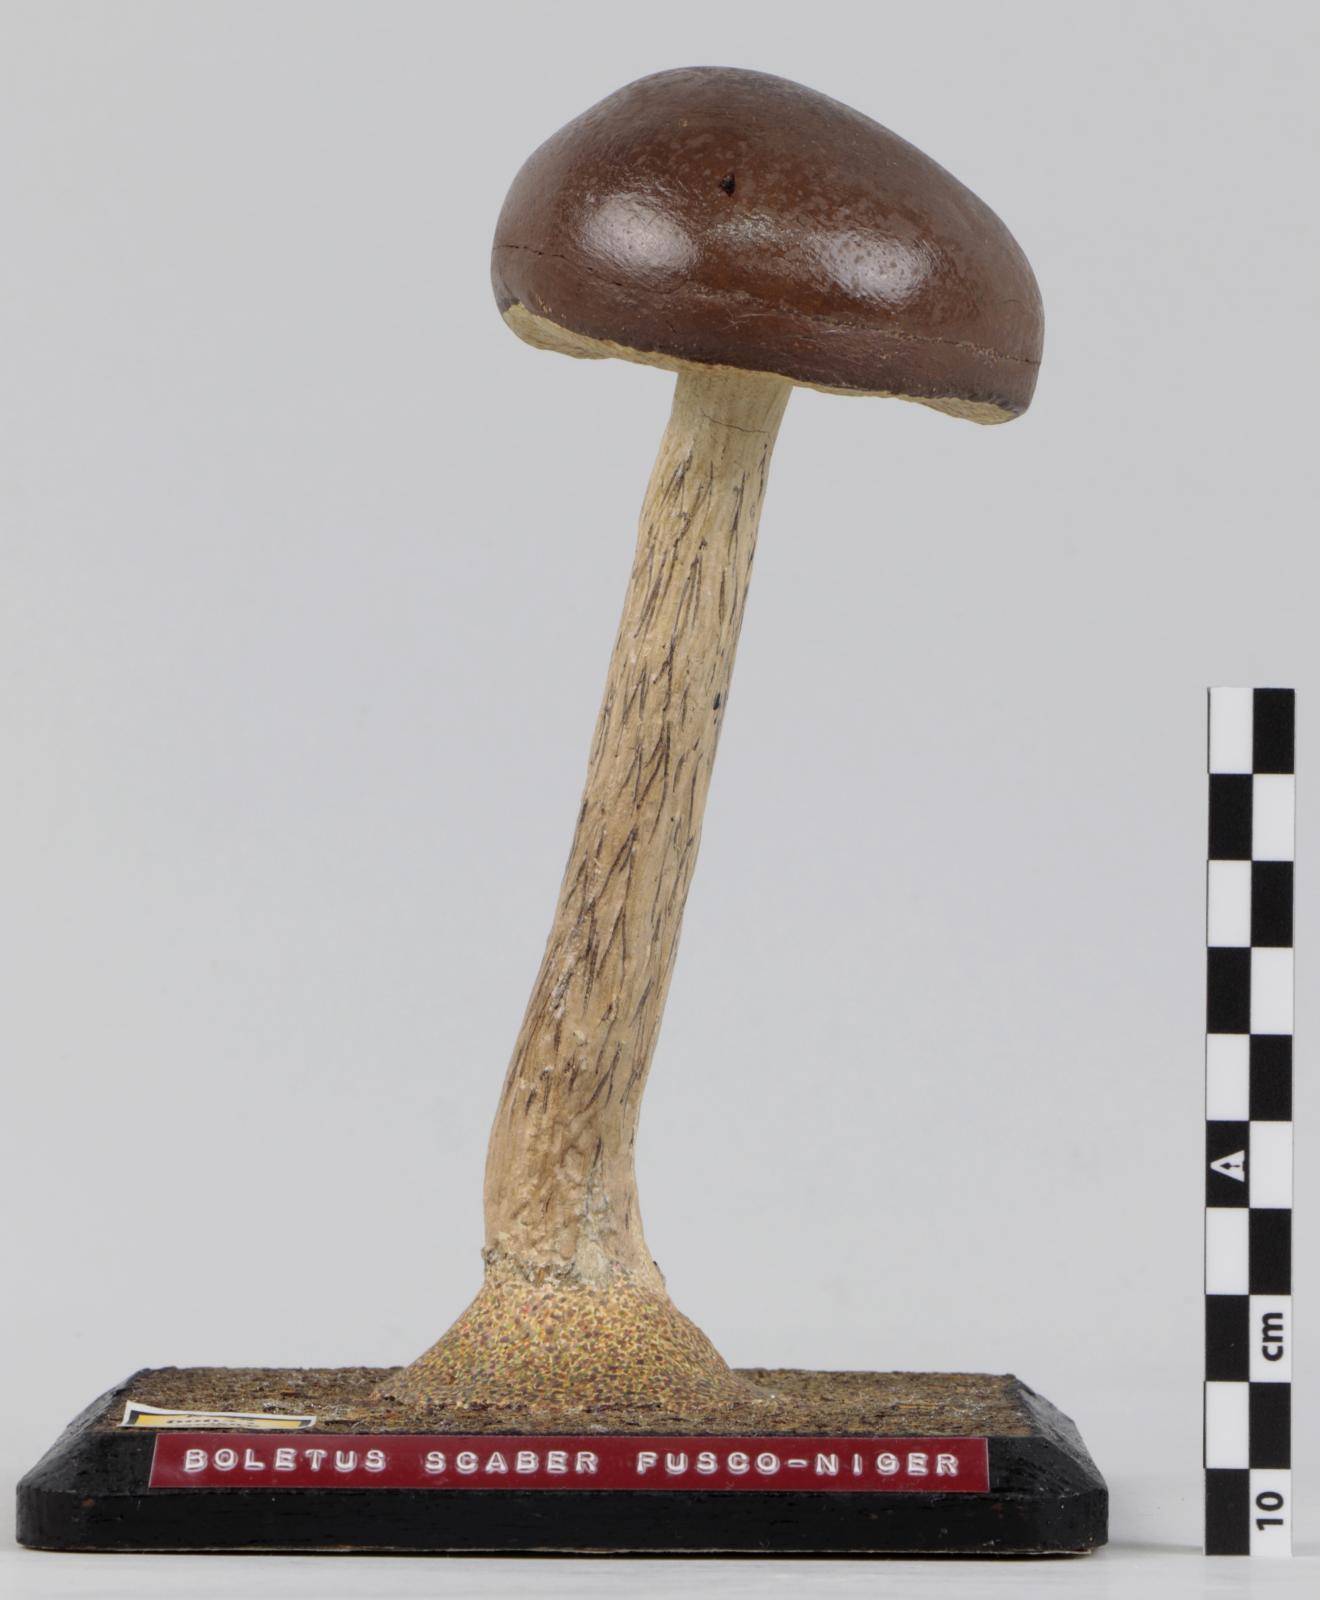 Modelo de Boletus scaber fusco-niger